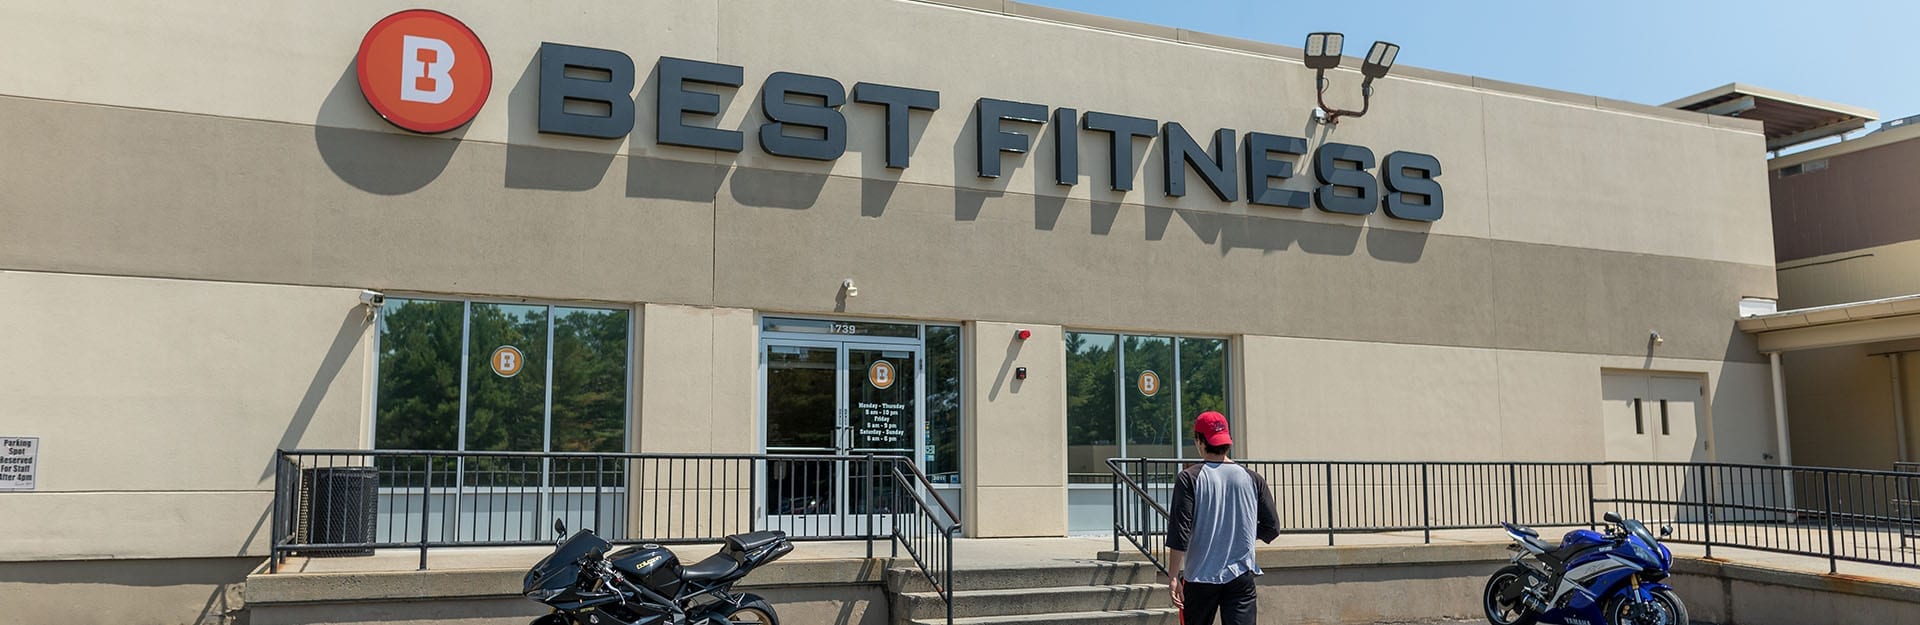 best fitness building gym near me